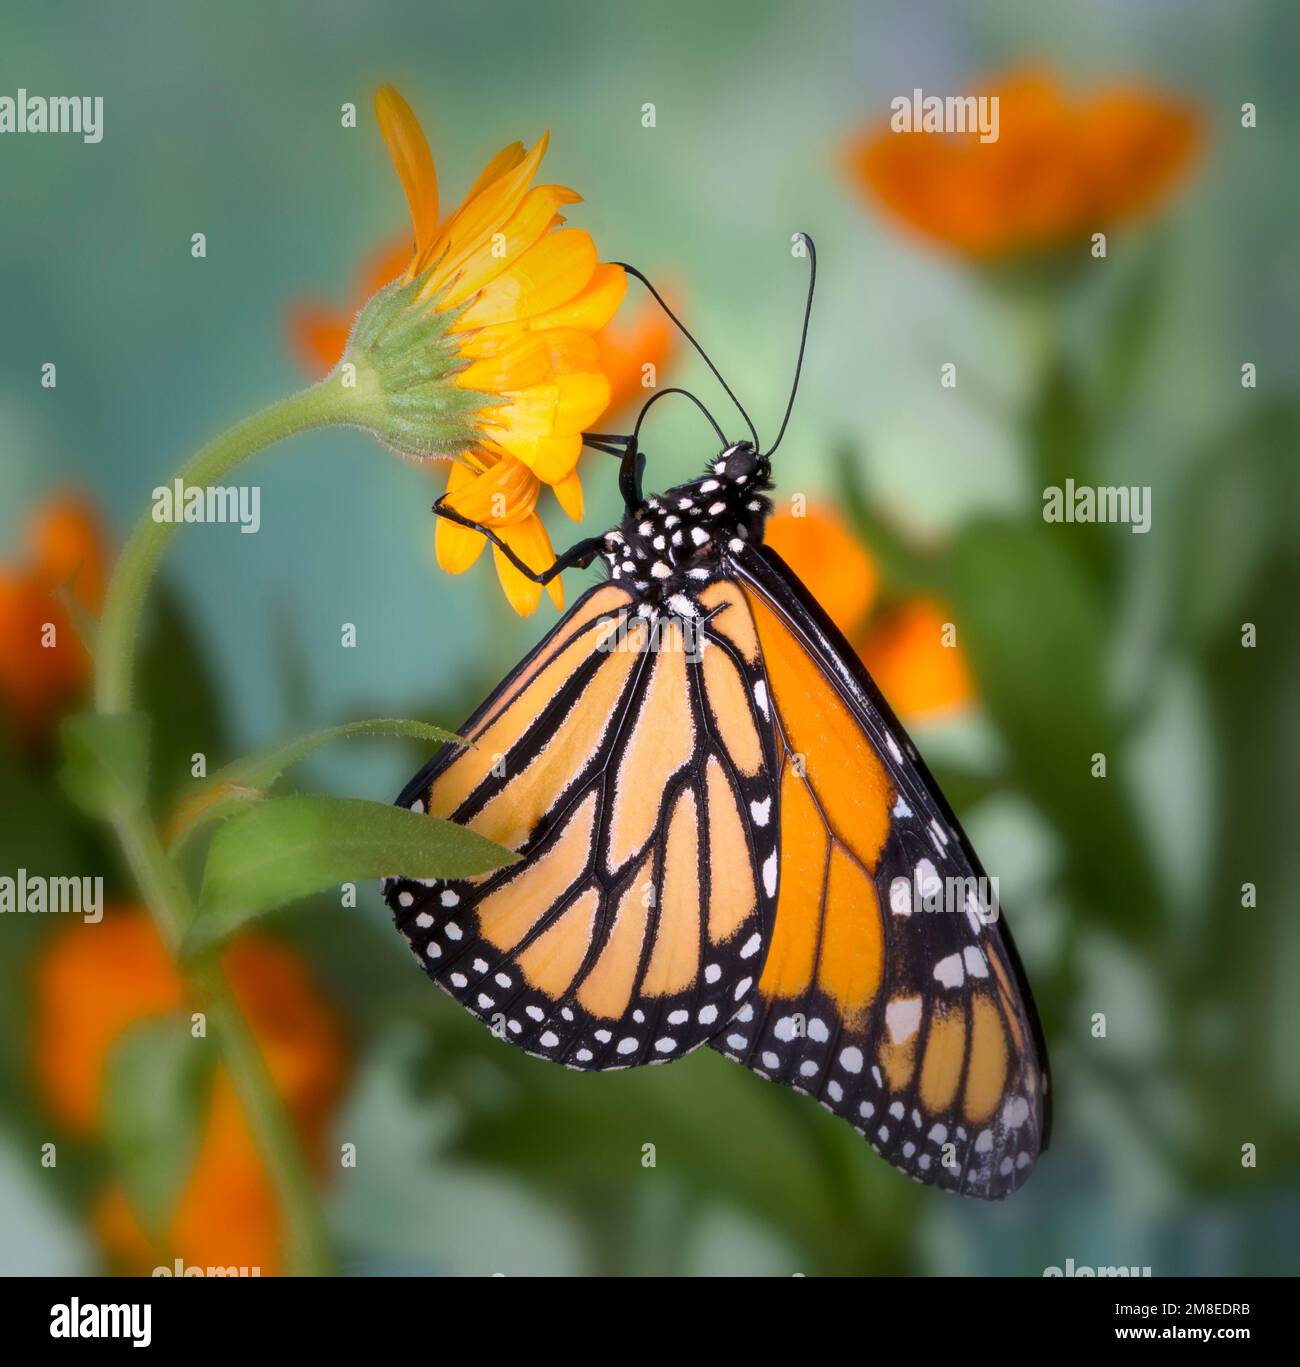 The side view of a monarch butterfly (danaus plexippus) feeding on an orange daisy flower. Stock Photo